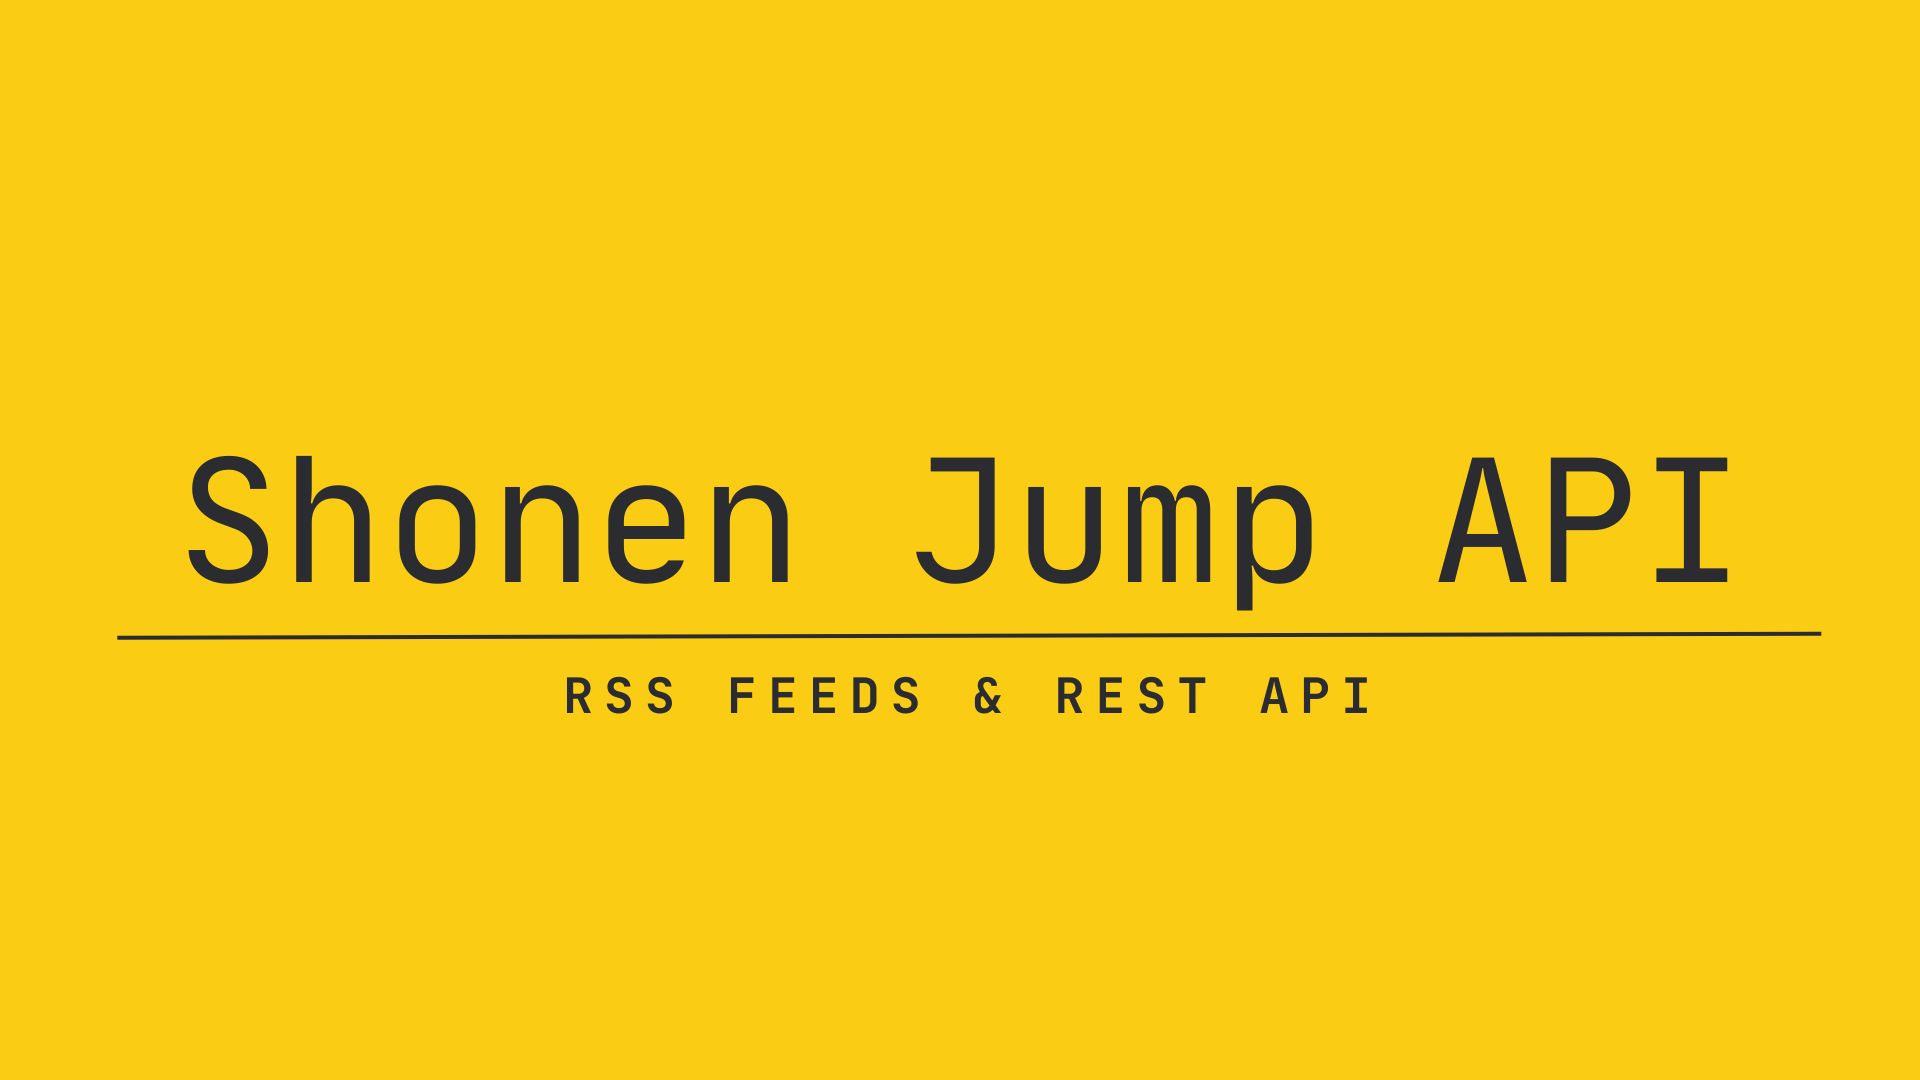 Shonen Jump RSS Feed header image